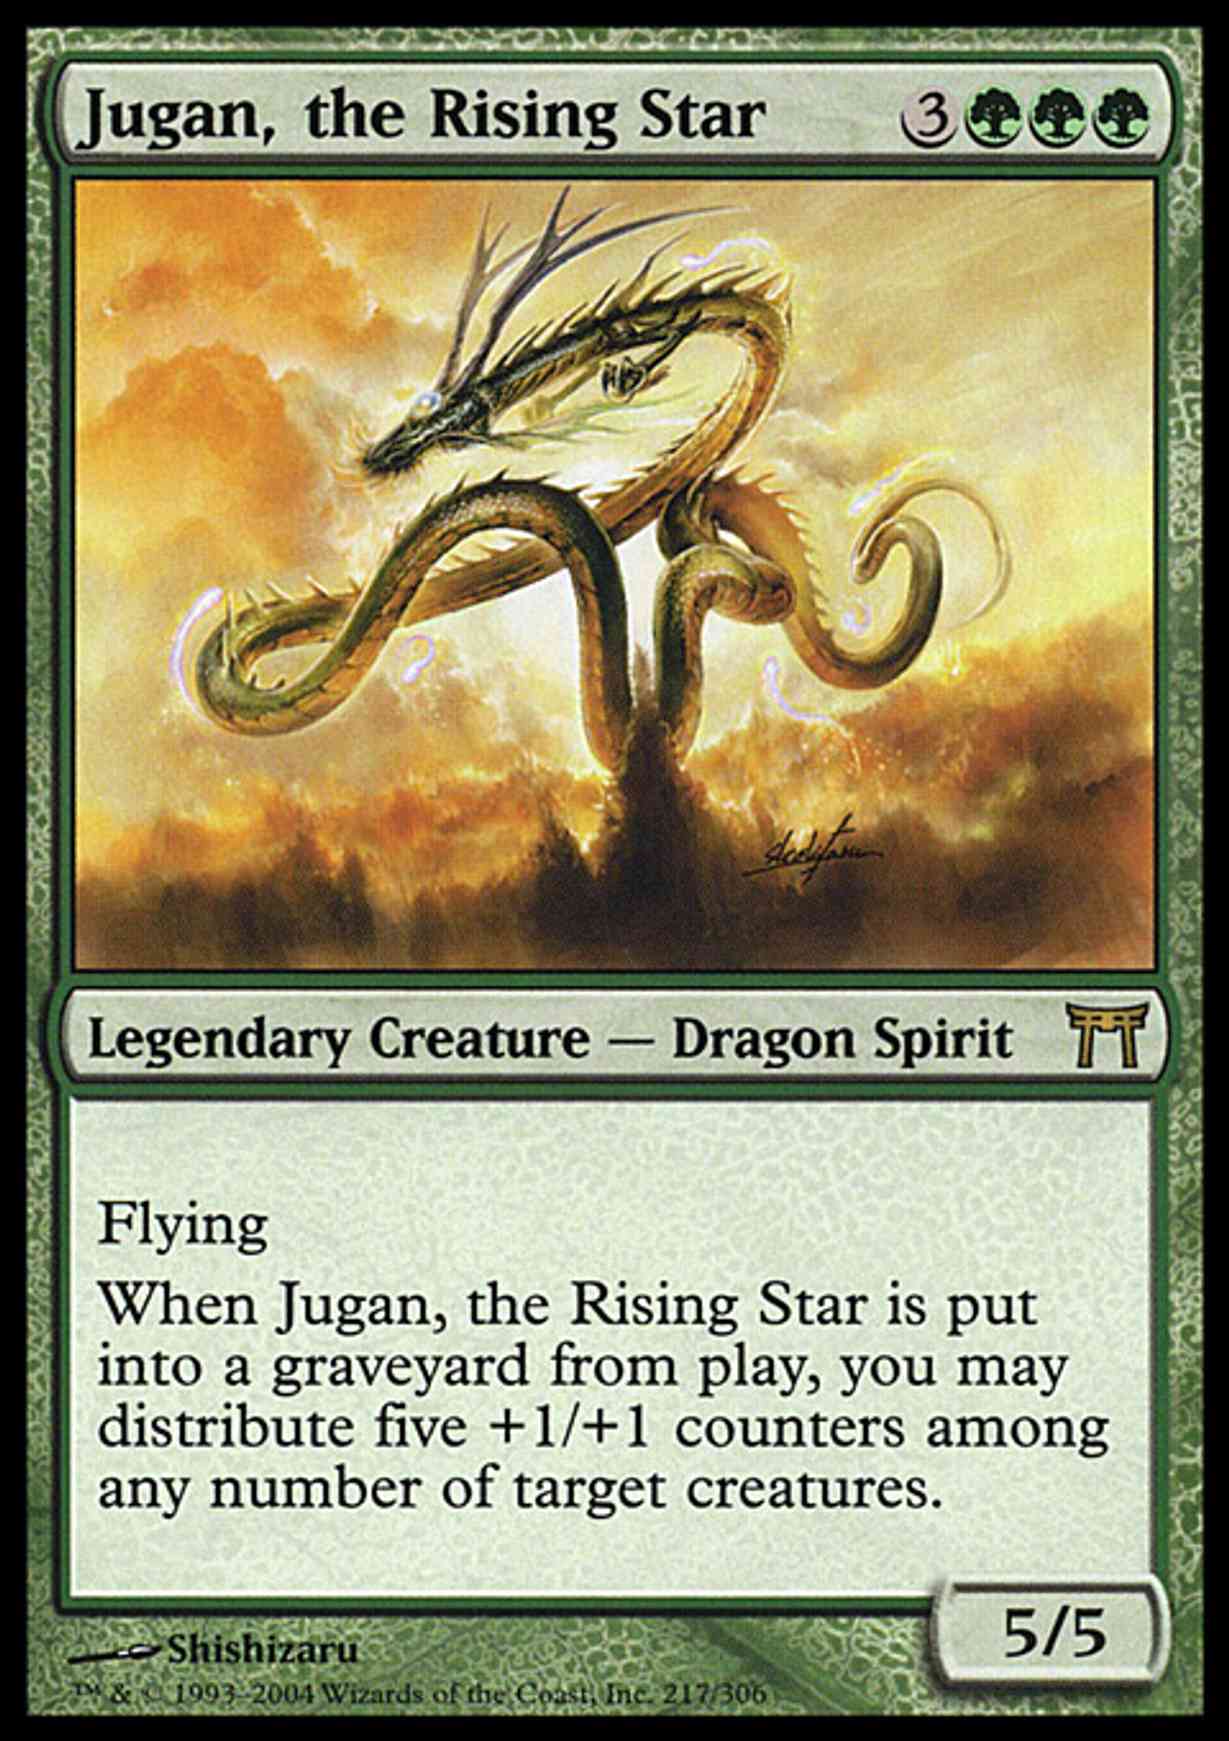 Jugan, the Rising Star magic card front